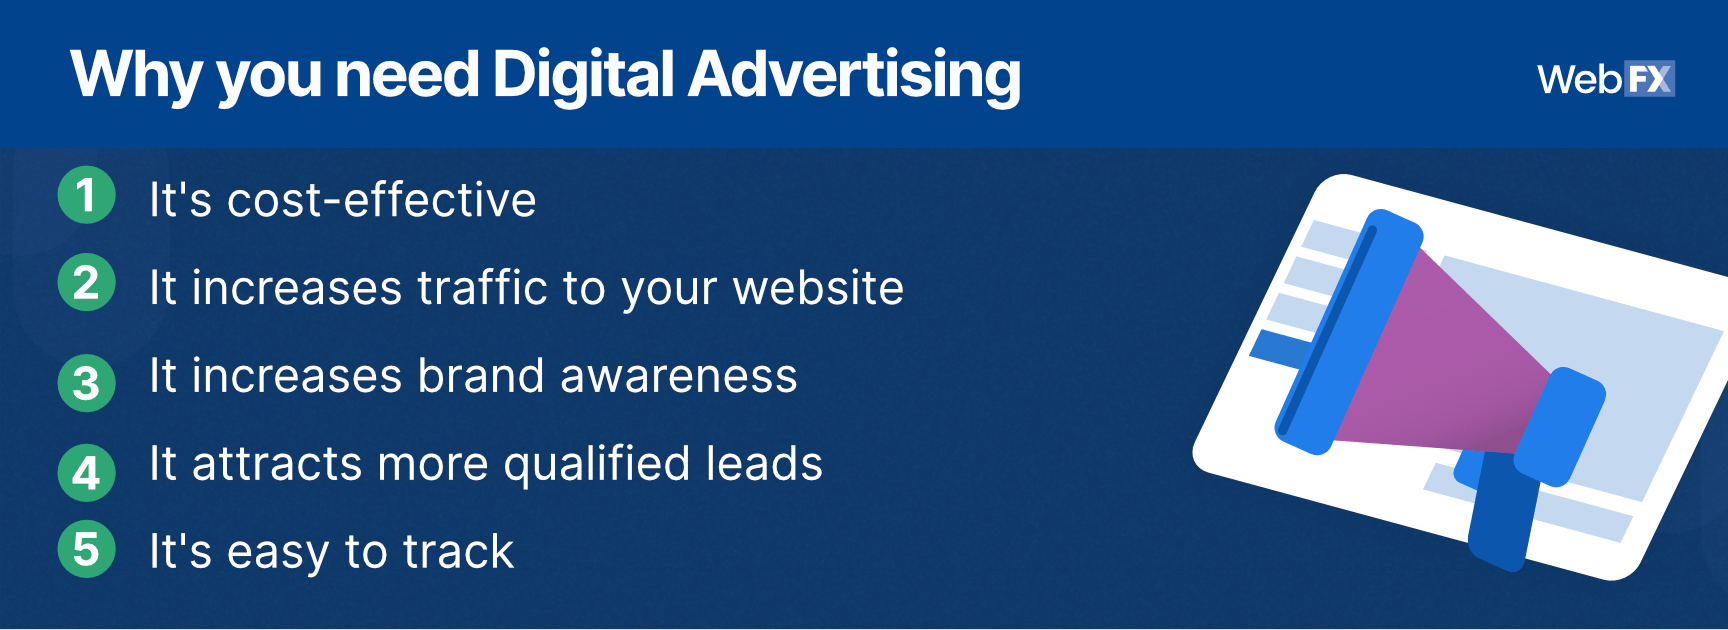 Digital advertising services benefits